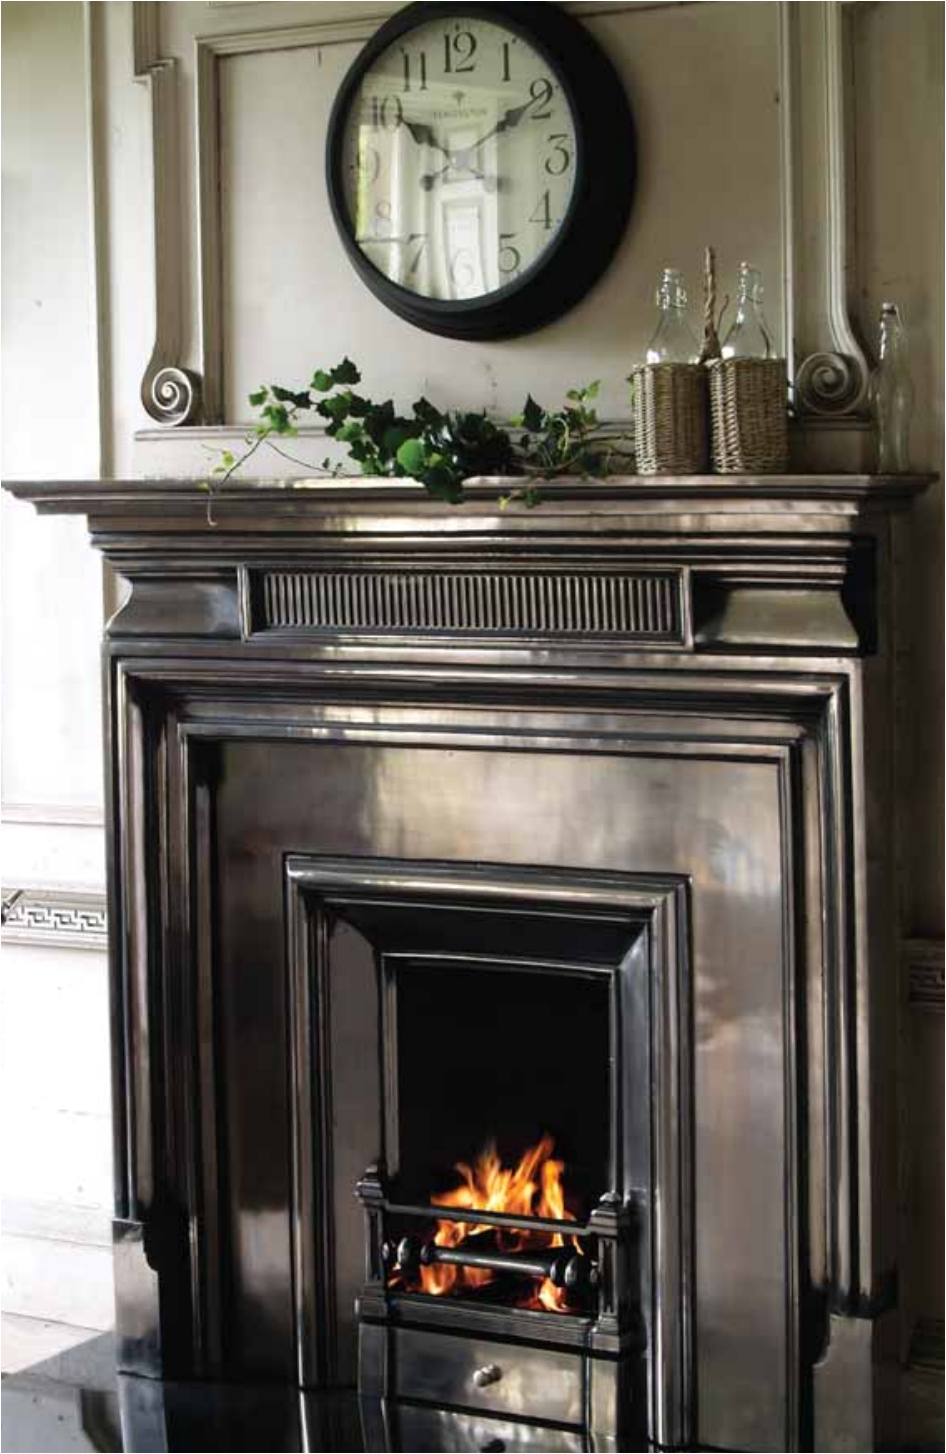 Faux Fireplace Surround for Sale Carron Cast Iron Fire Insert 1800 S Home Pinterest Iron Cast